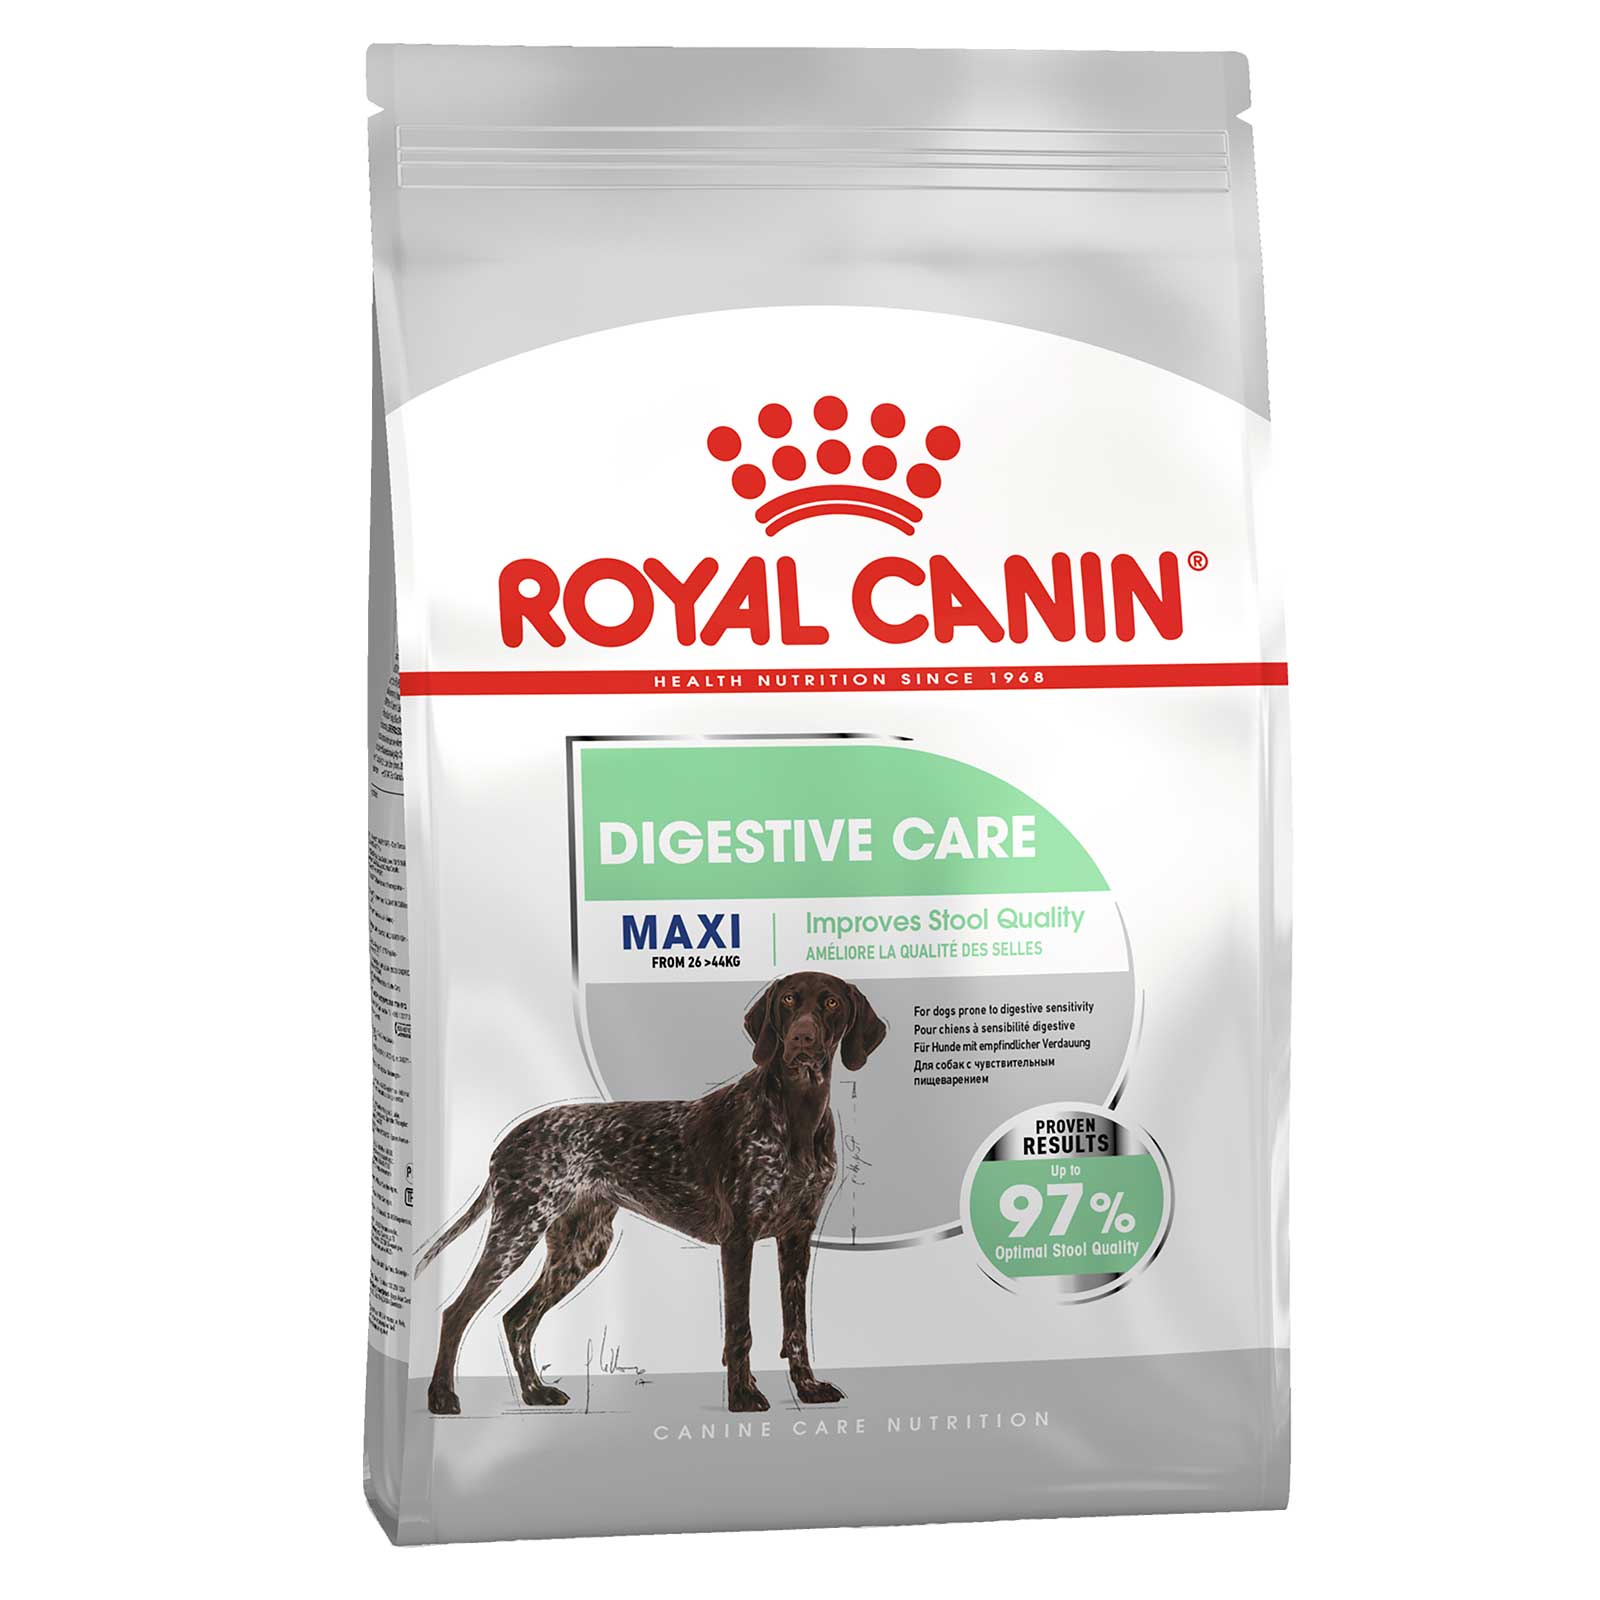 Royal Canin Dog Food Digestive Care Maxi